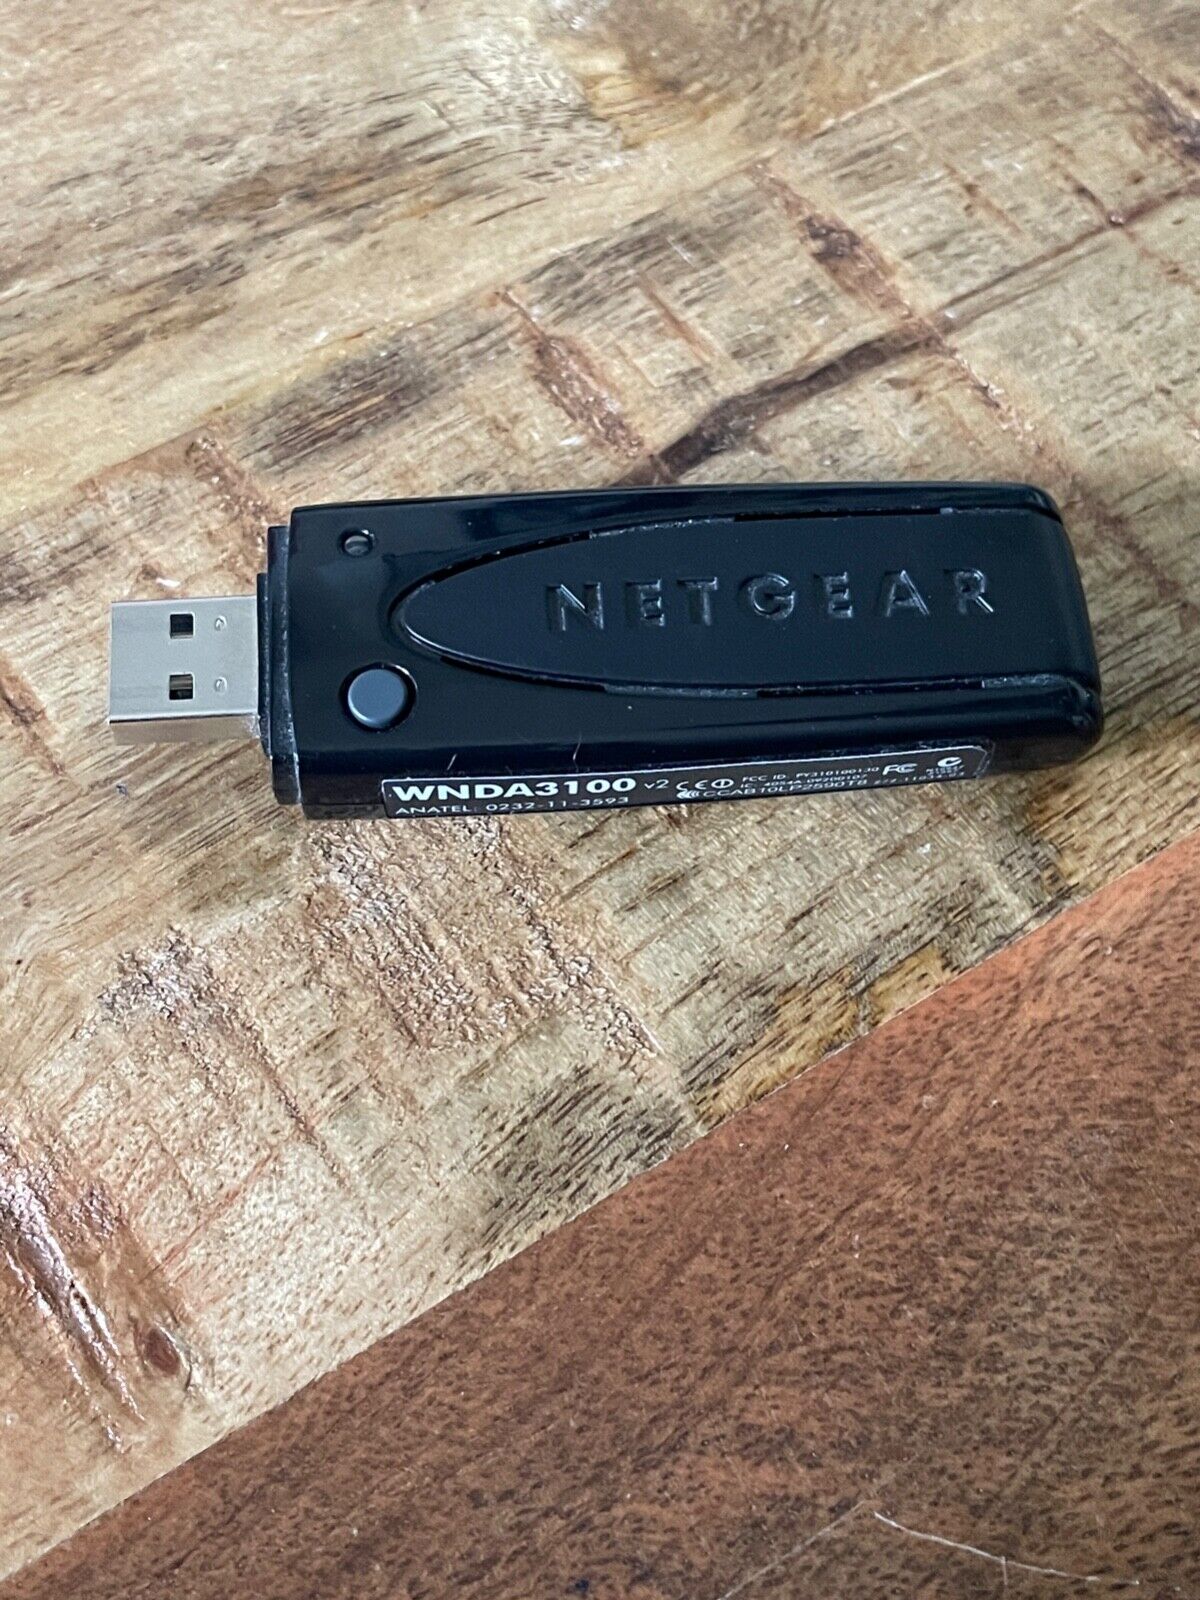 NETGEAR WNDA3100v2 Dual Band USB Wireless Adapter Desktop Windows 7/8 WiFi Card